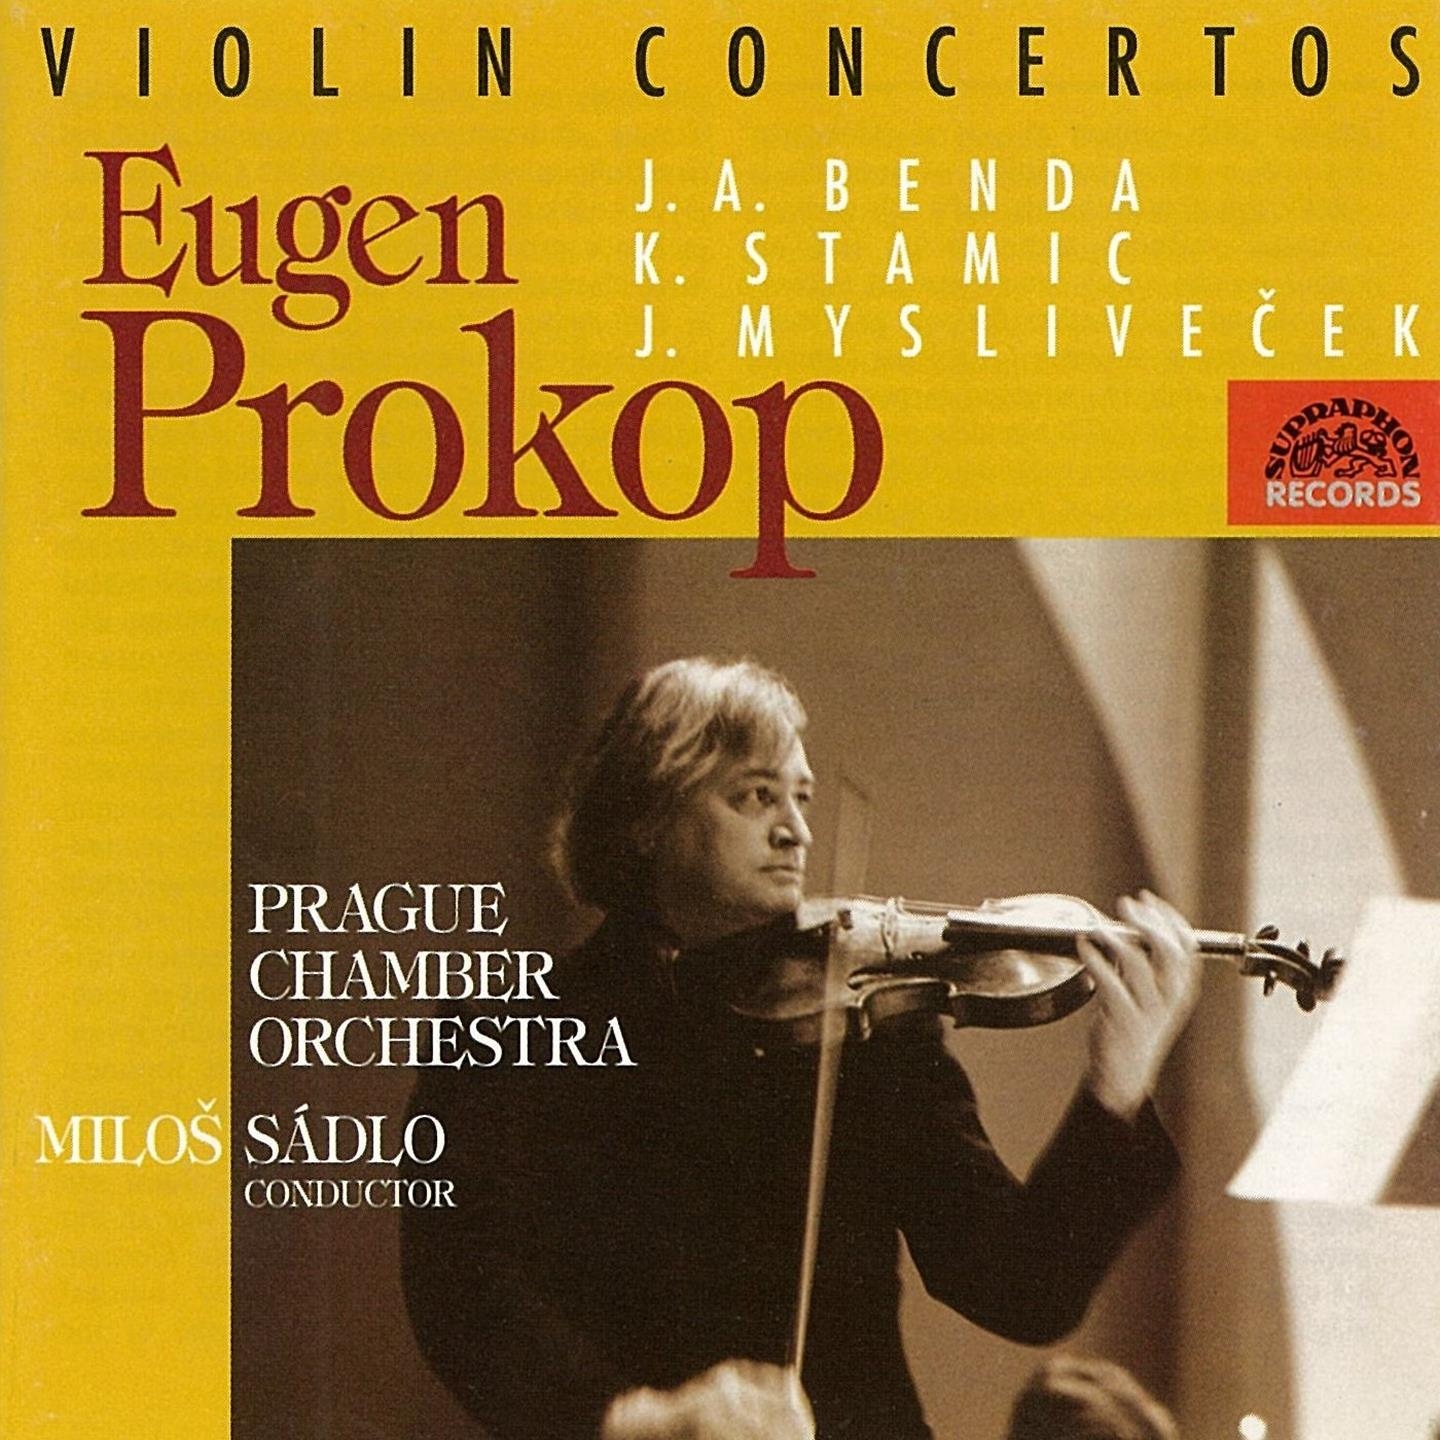 Concerto for Violin and Orchestra in D-Sharp Major, .: I. Allegro assai